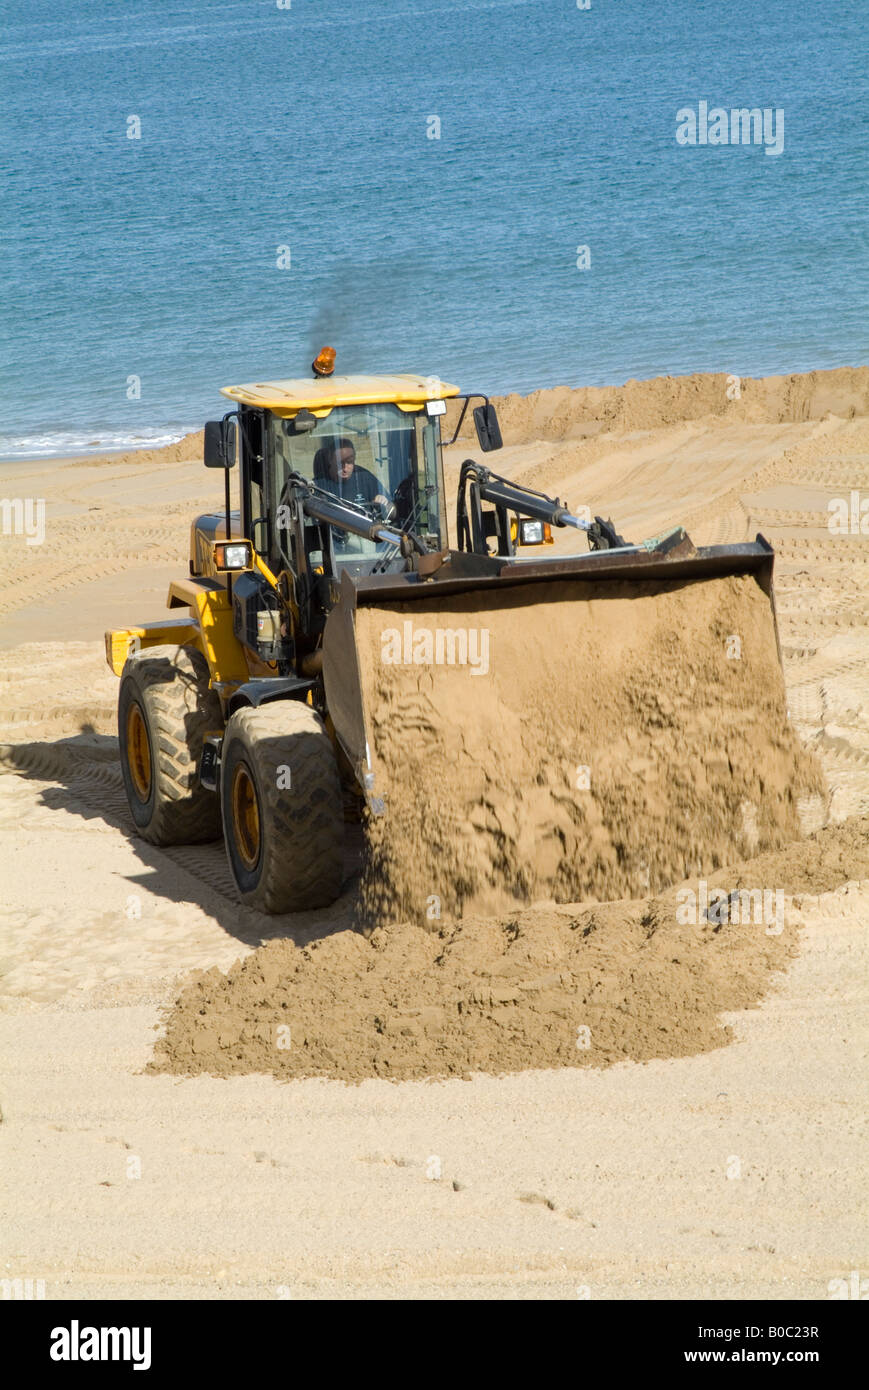 jcb digger excavator bucket sand spade dig digging yellow bob the ...